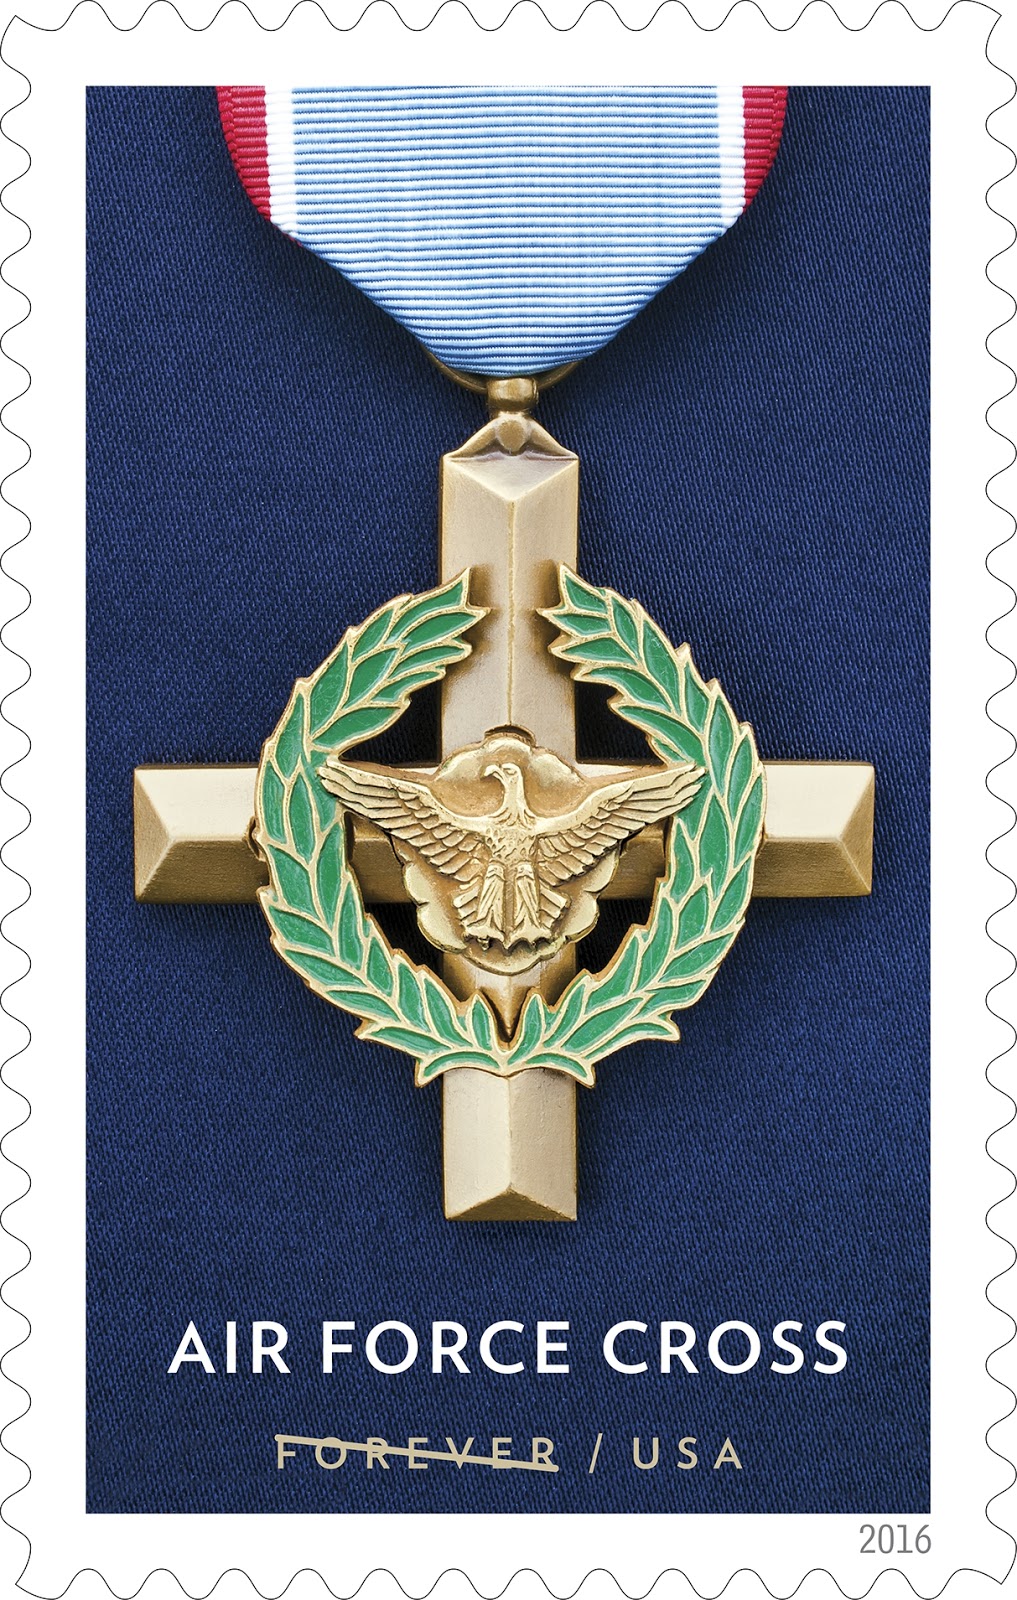 Cross service. Distinguished service Cross. Cross Force.